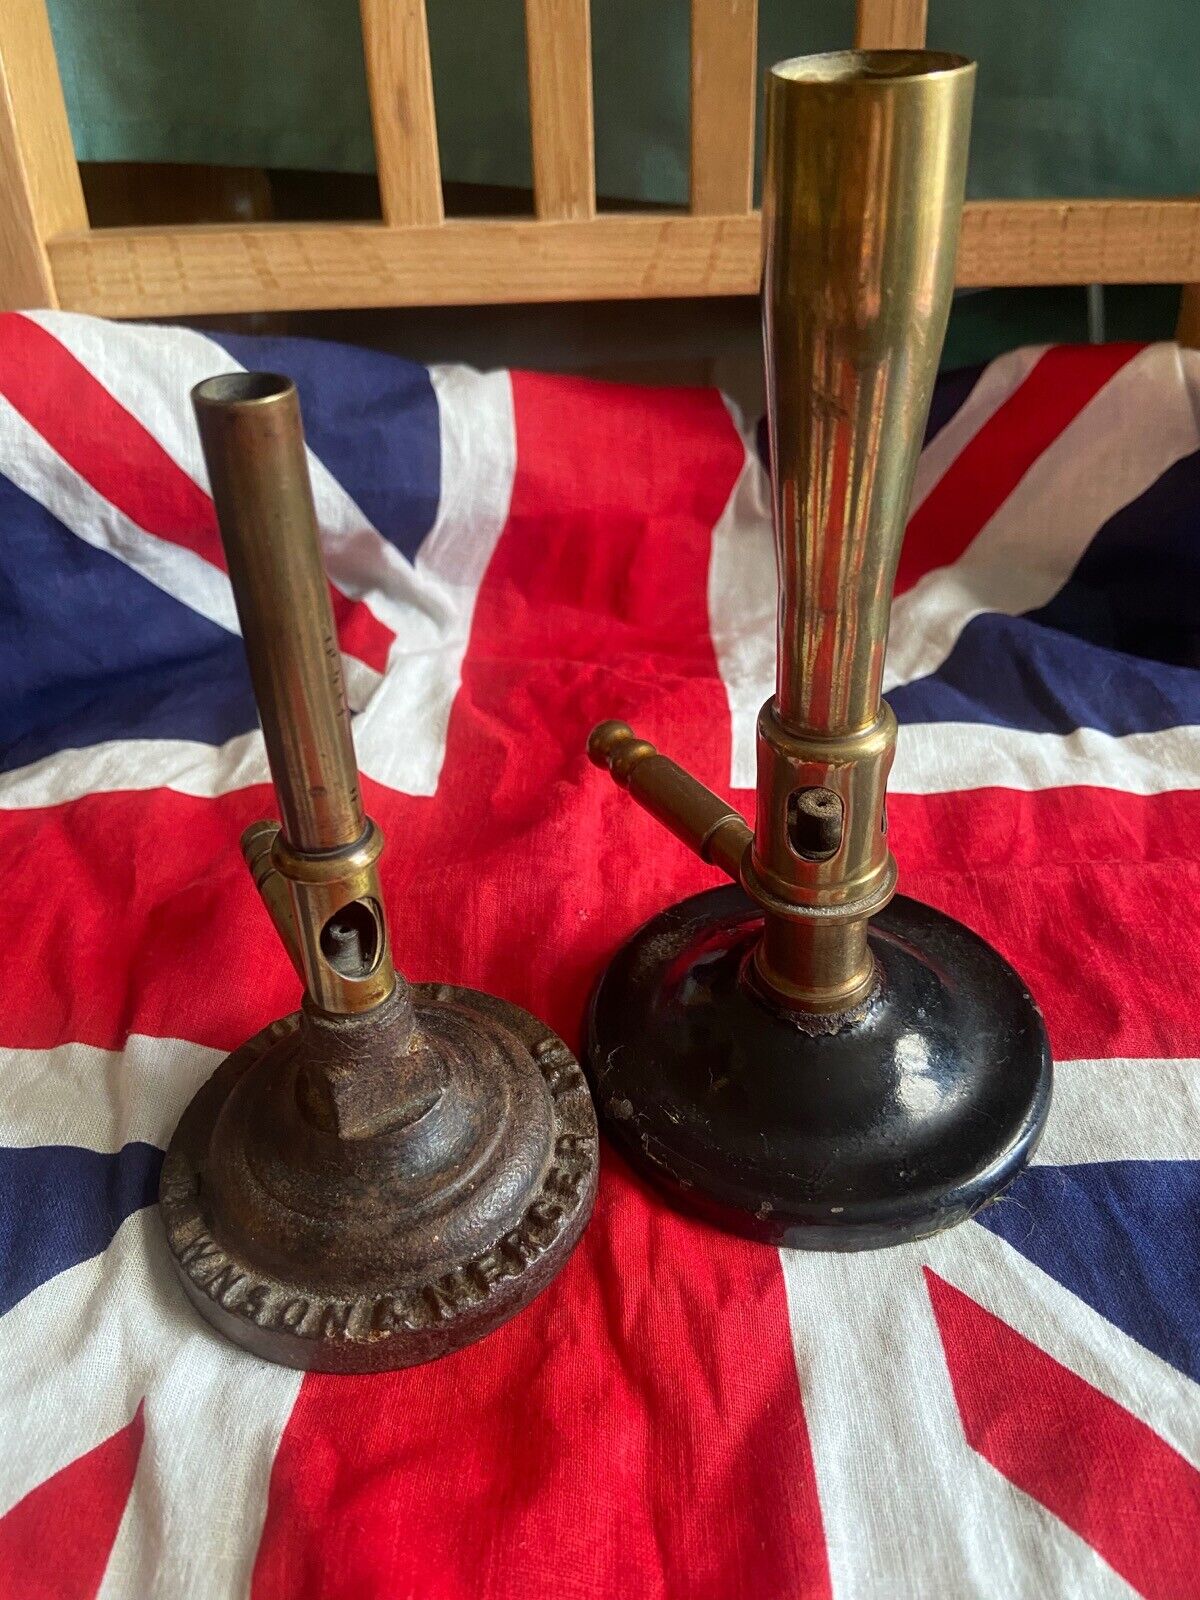 2 Vintage Lab Brass Bunsen Burners 1. Townson & Mercer 2.unknown large outlet